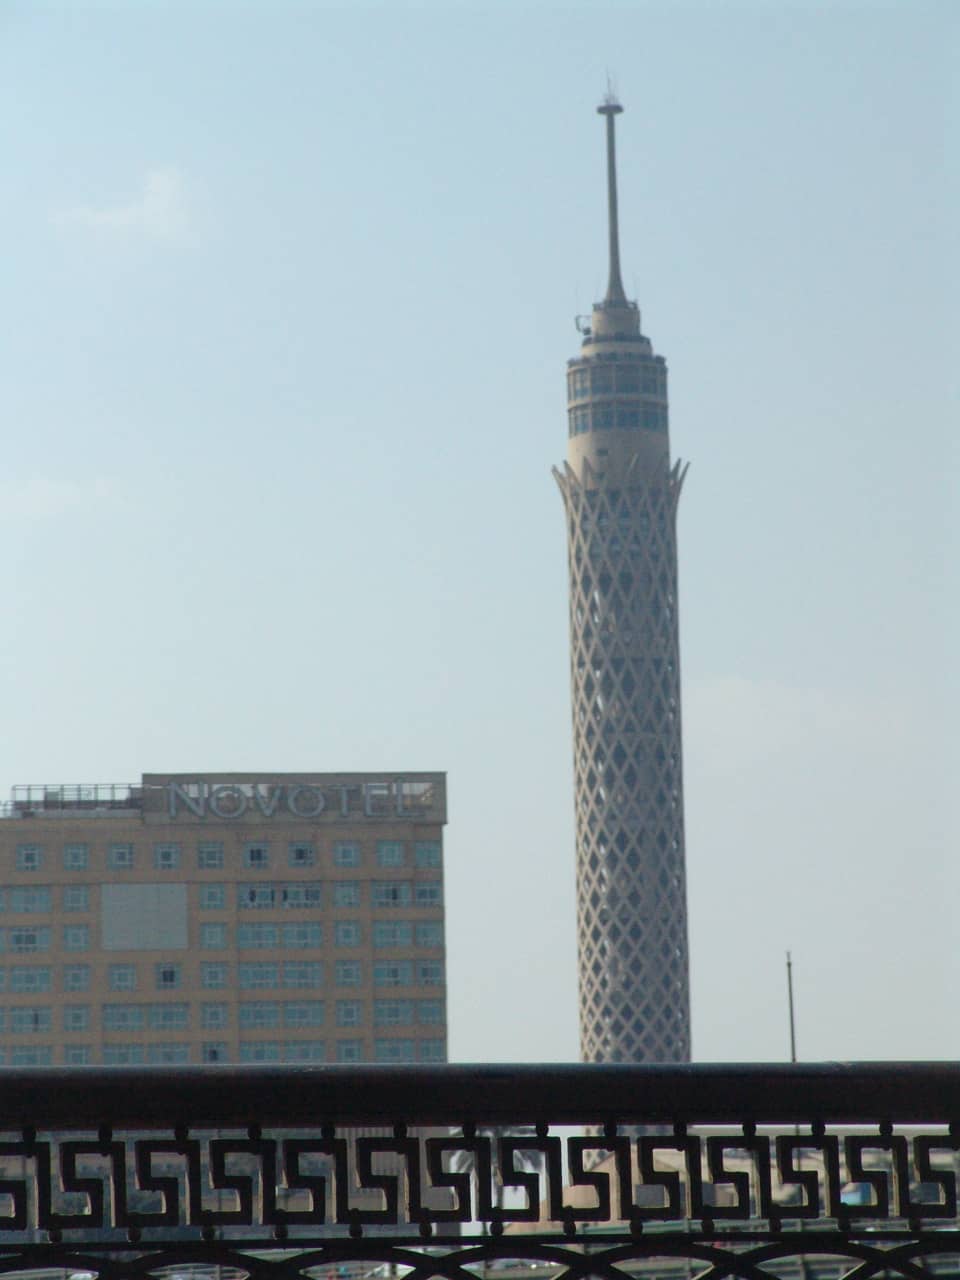 Cairo Tower in Cairo, Egypt